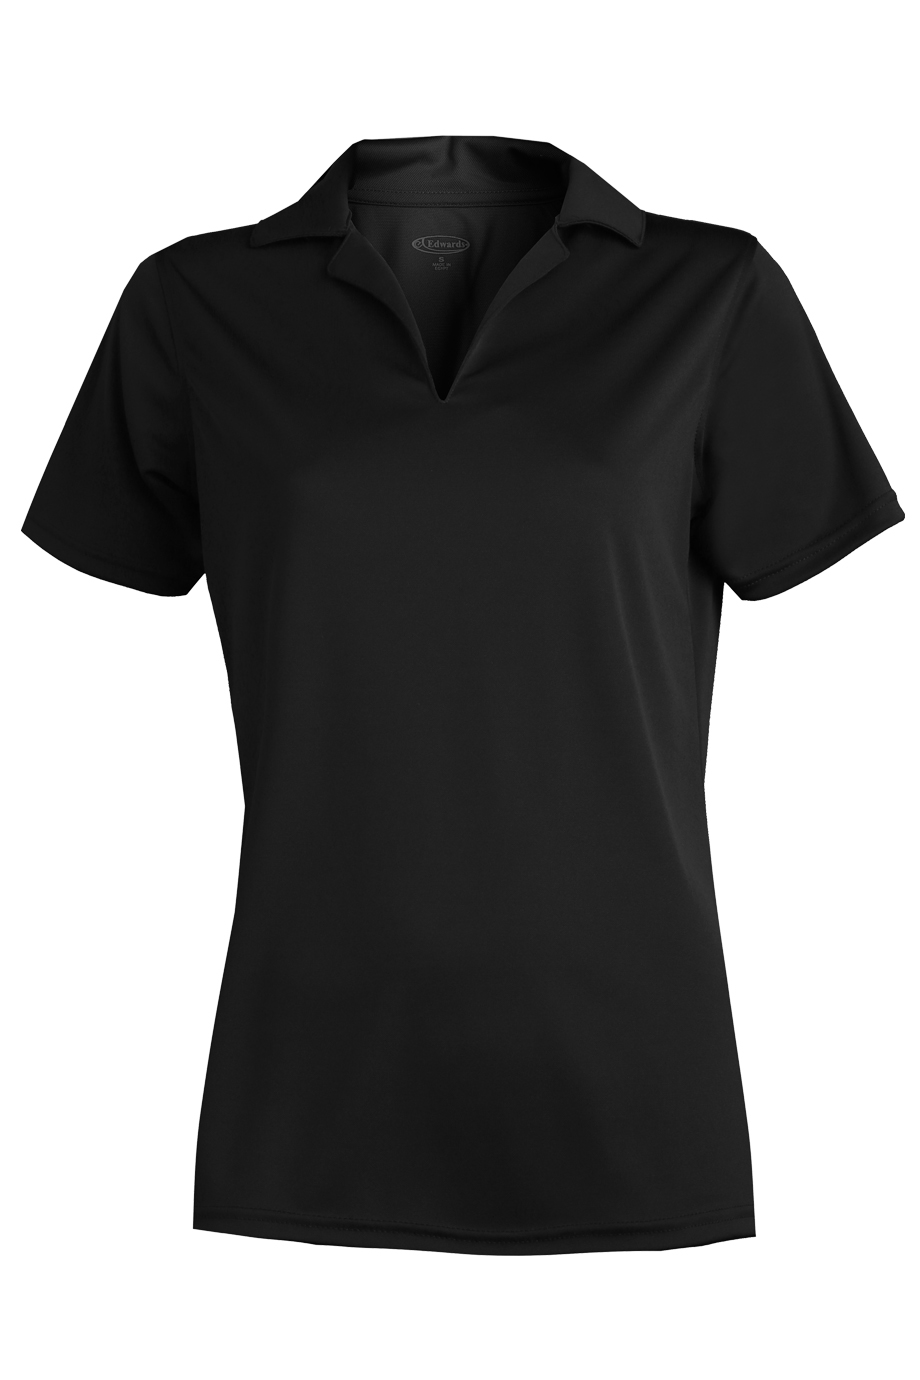 Edwards Garment Womens Smooth Wicks Moisture V Neck Collar Polo Shirt 